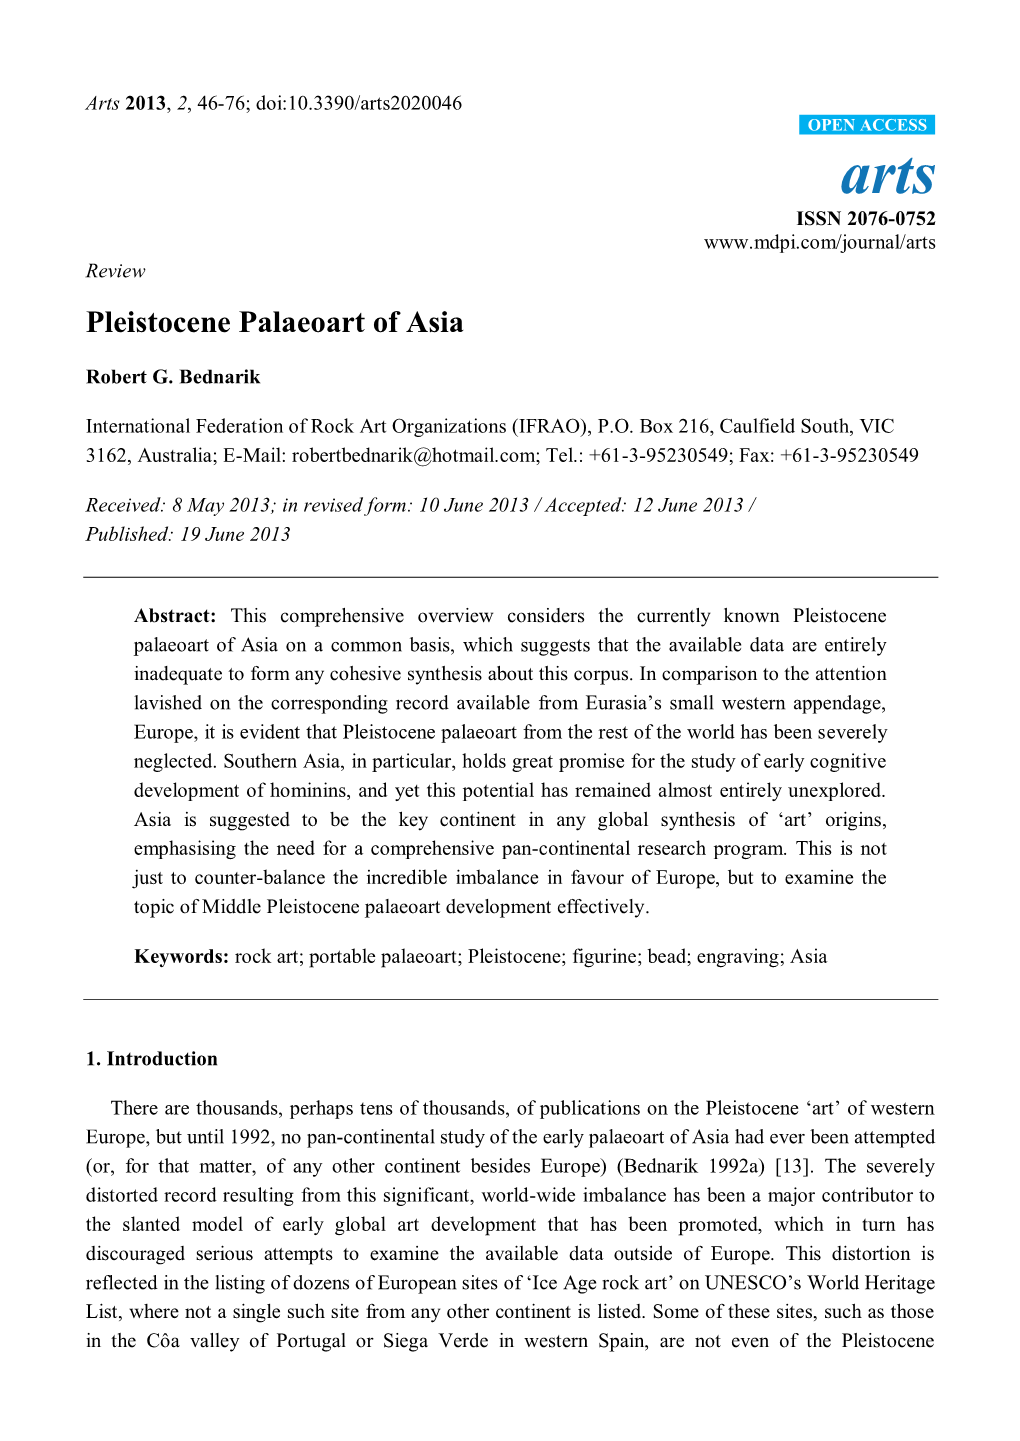 Pleistocene Palaeoart of Asia